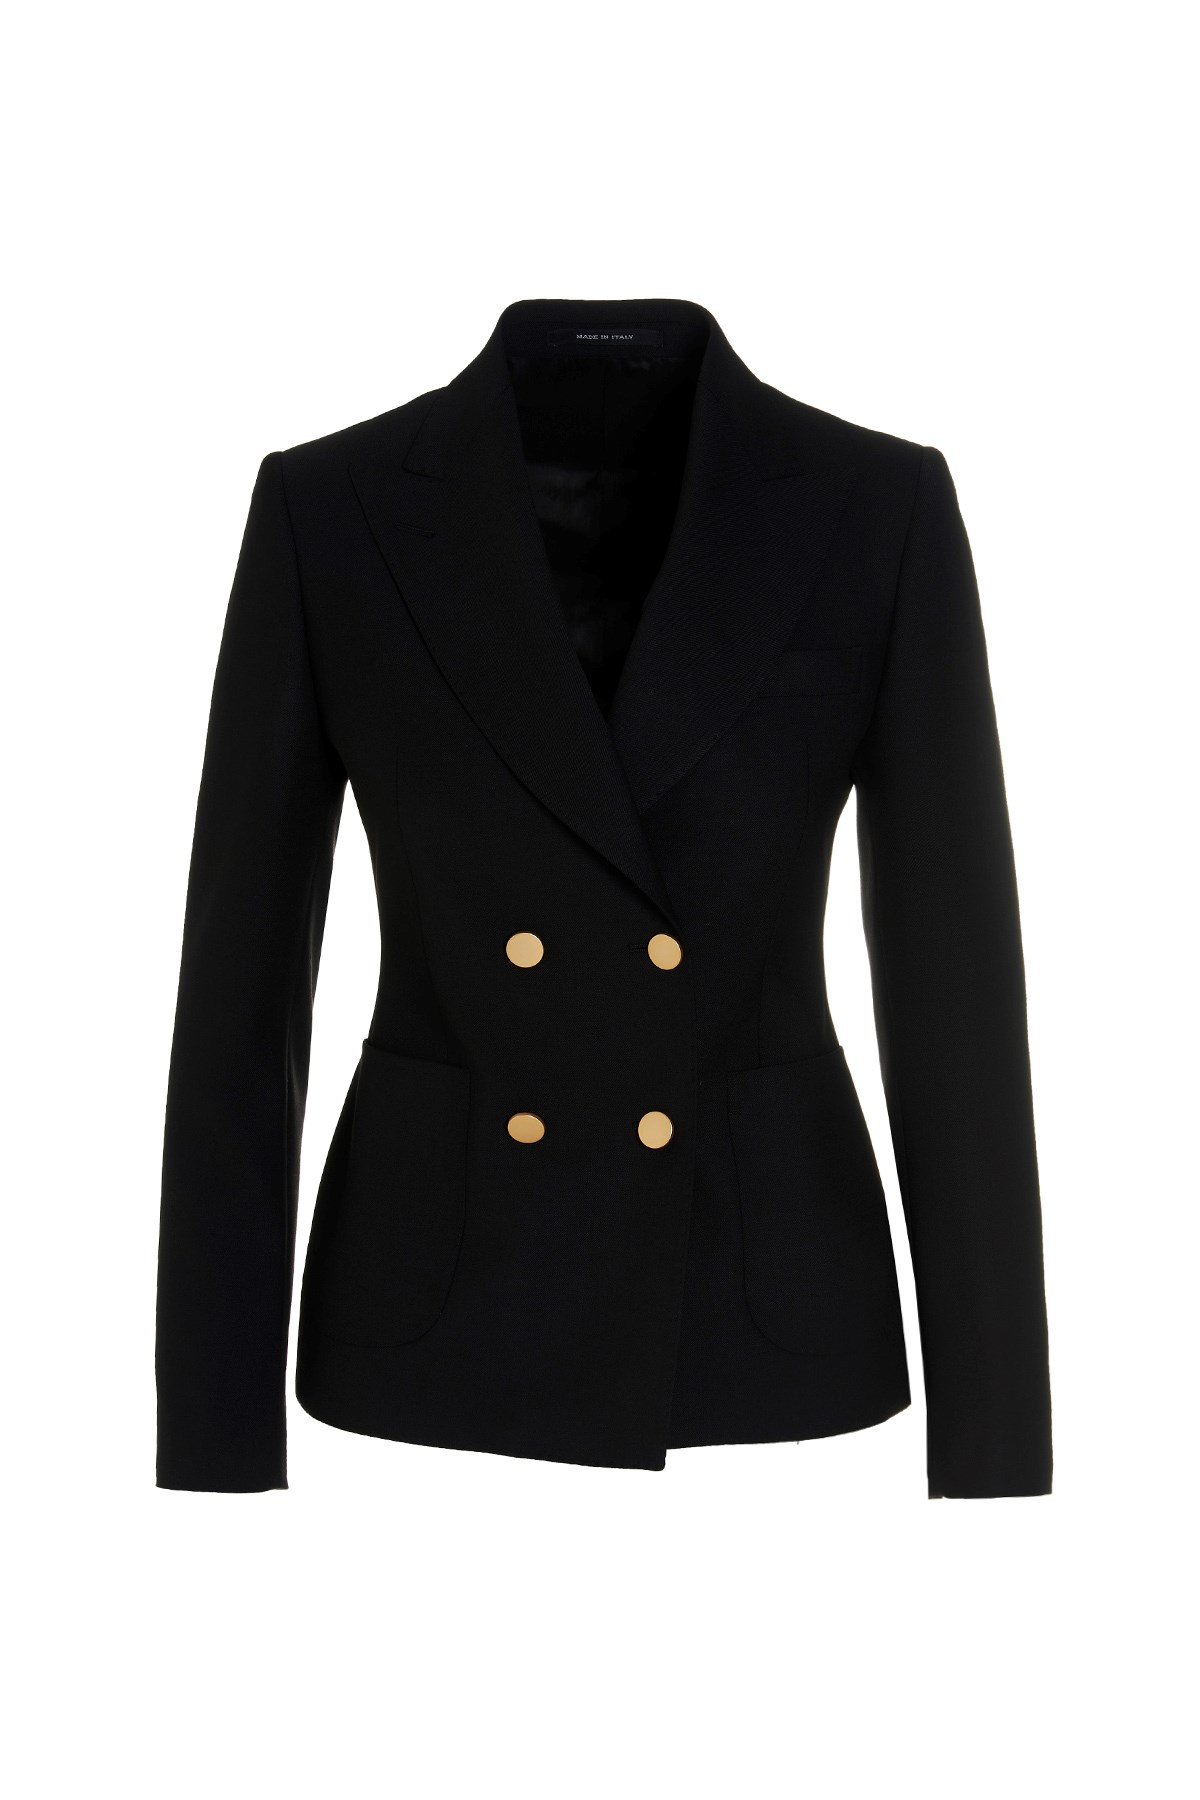 TAGLIATORE 'Coral’ Blazer Jacket